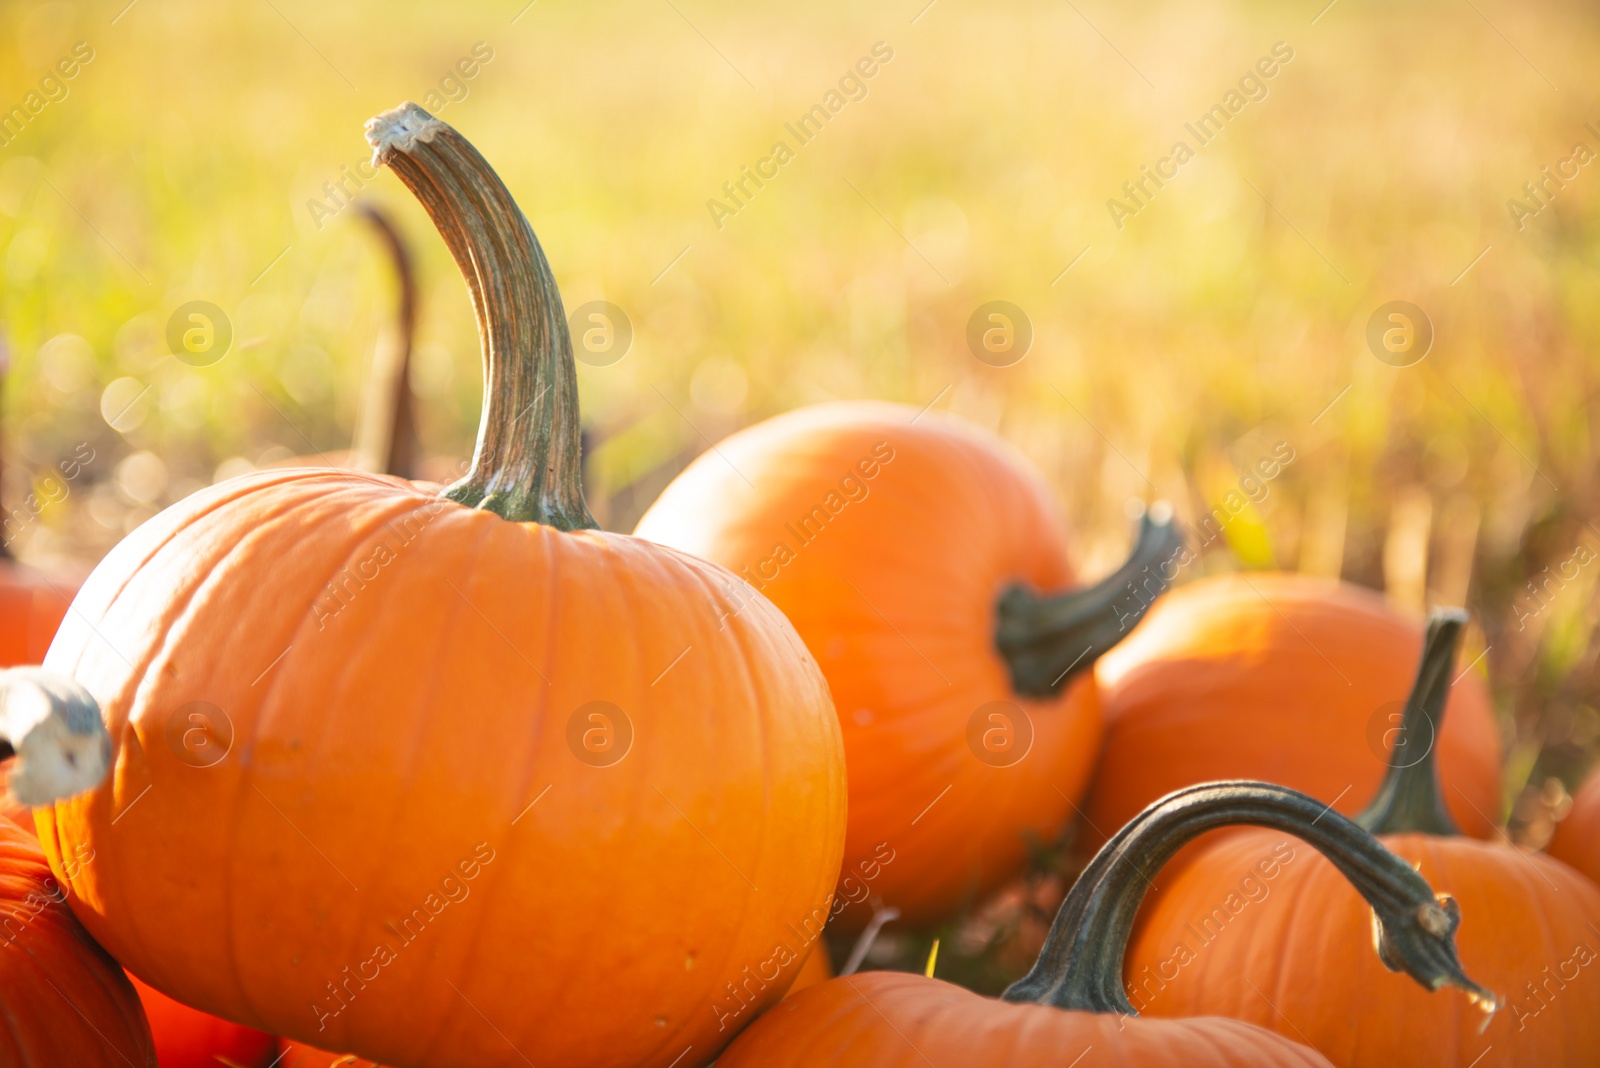 Photo of Many ripe orange pumpkins in field outdoors, closeup